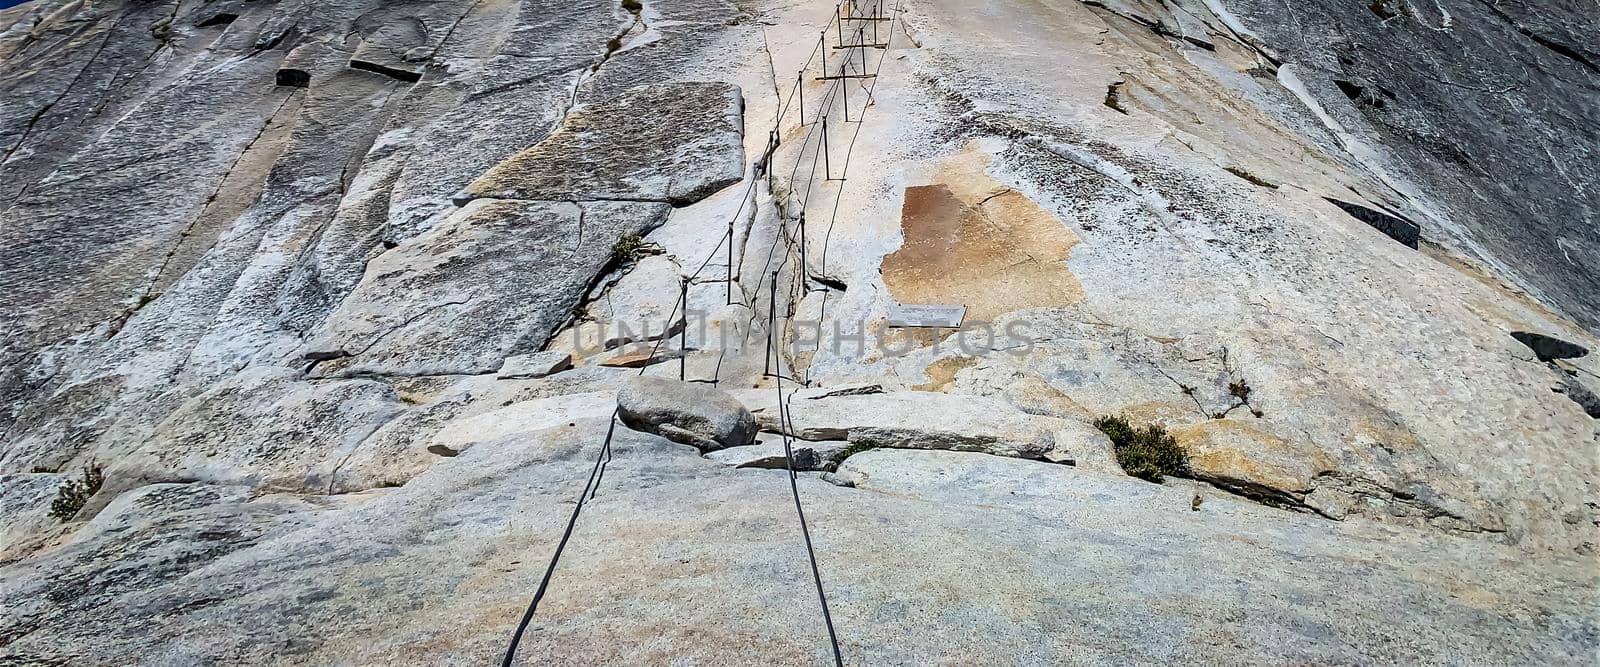 Half Dome cable in Yosemite National Park, California